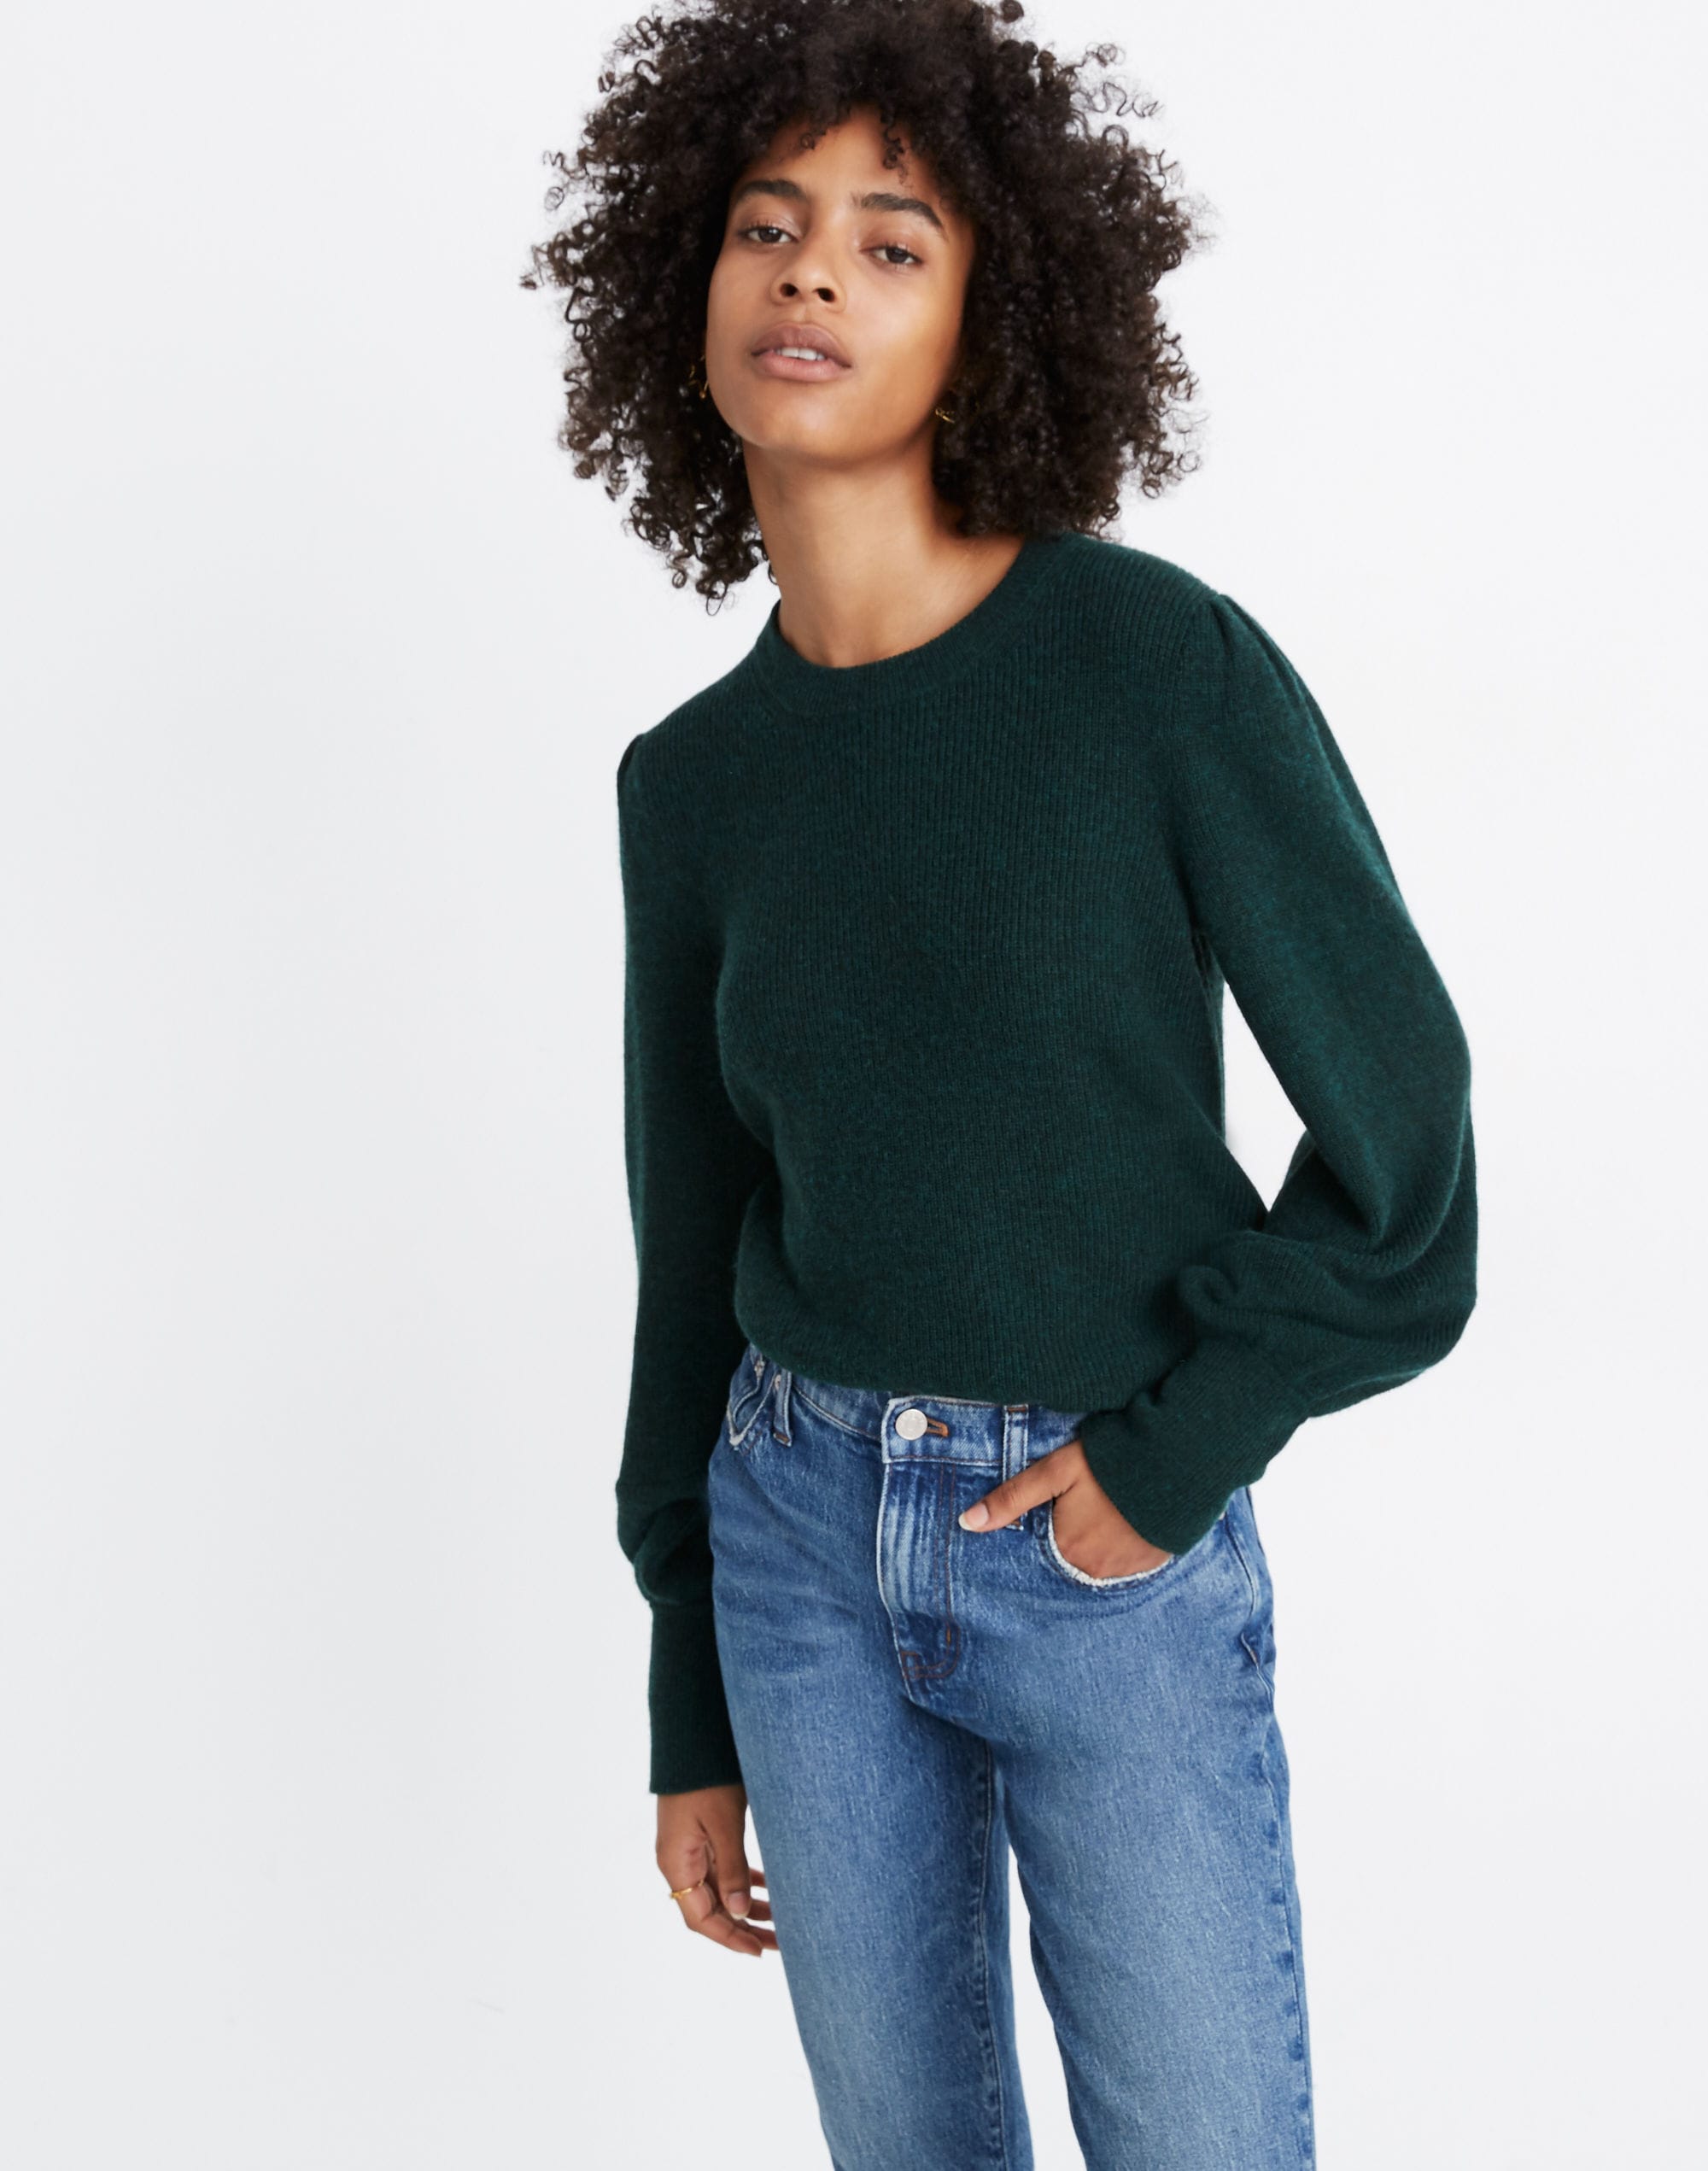 Baybrook Pullover Sweater